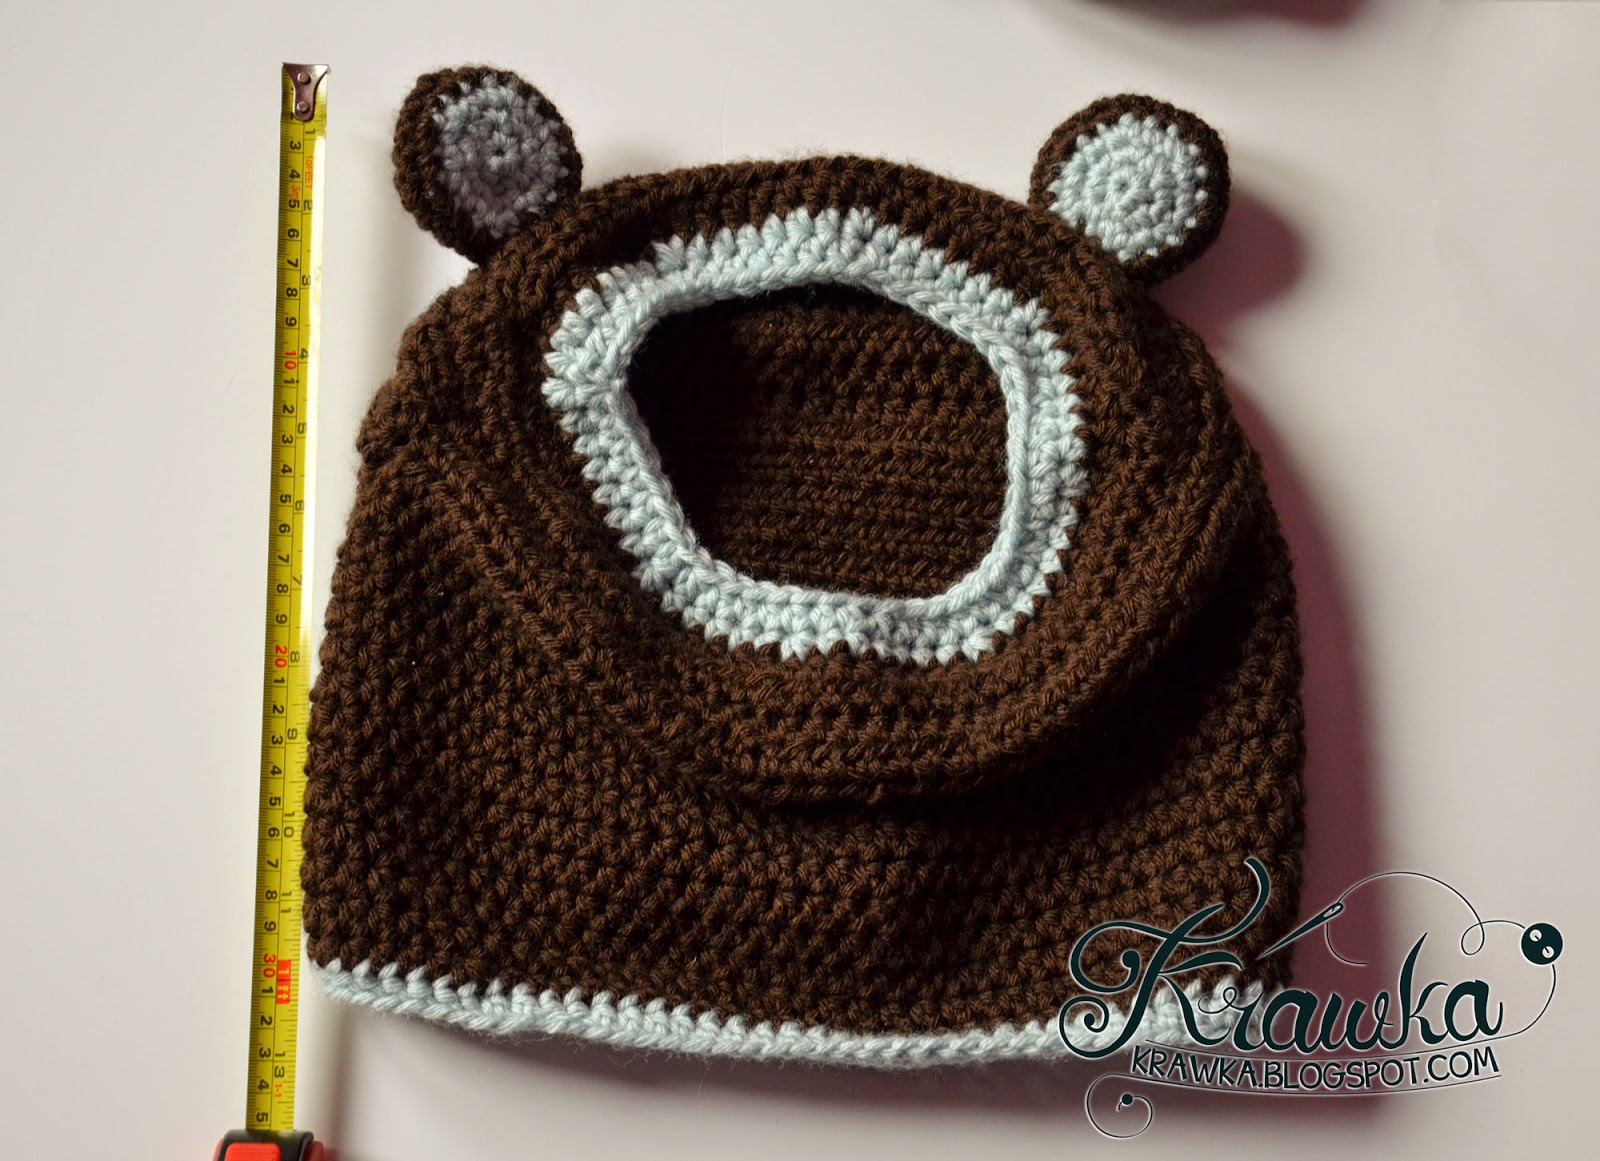 Krawka: Little bear - hooded cowl free crochet pattern. Brown bear with light blue ears, sooo cute and easy to make.